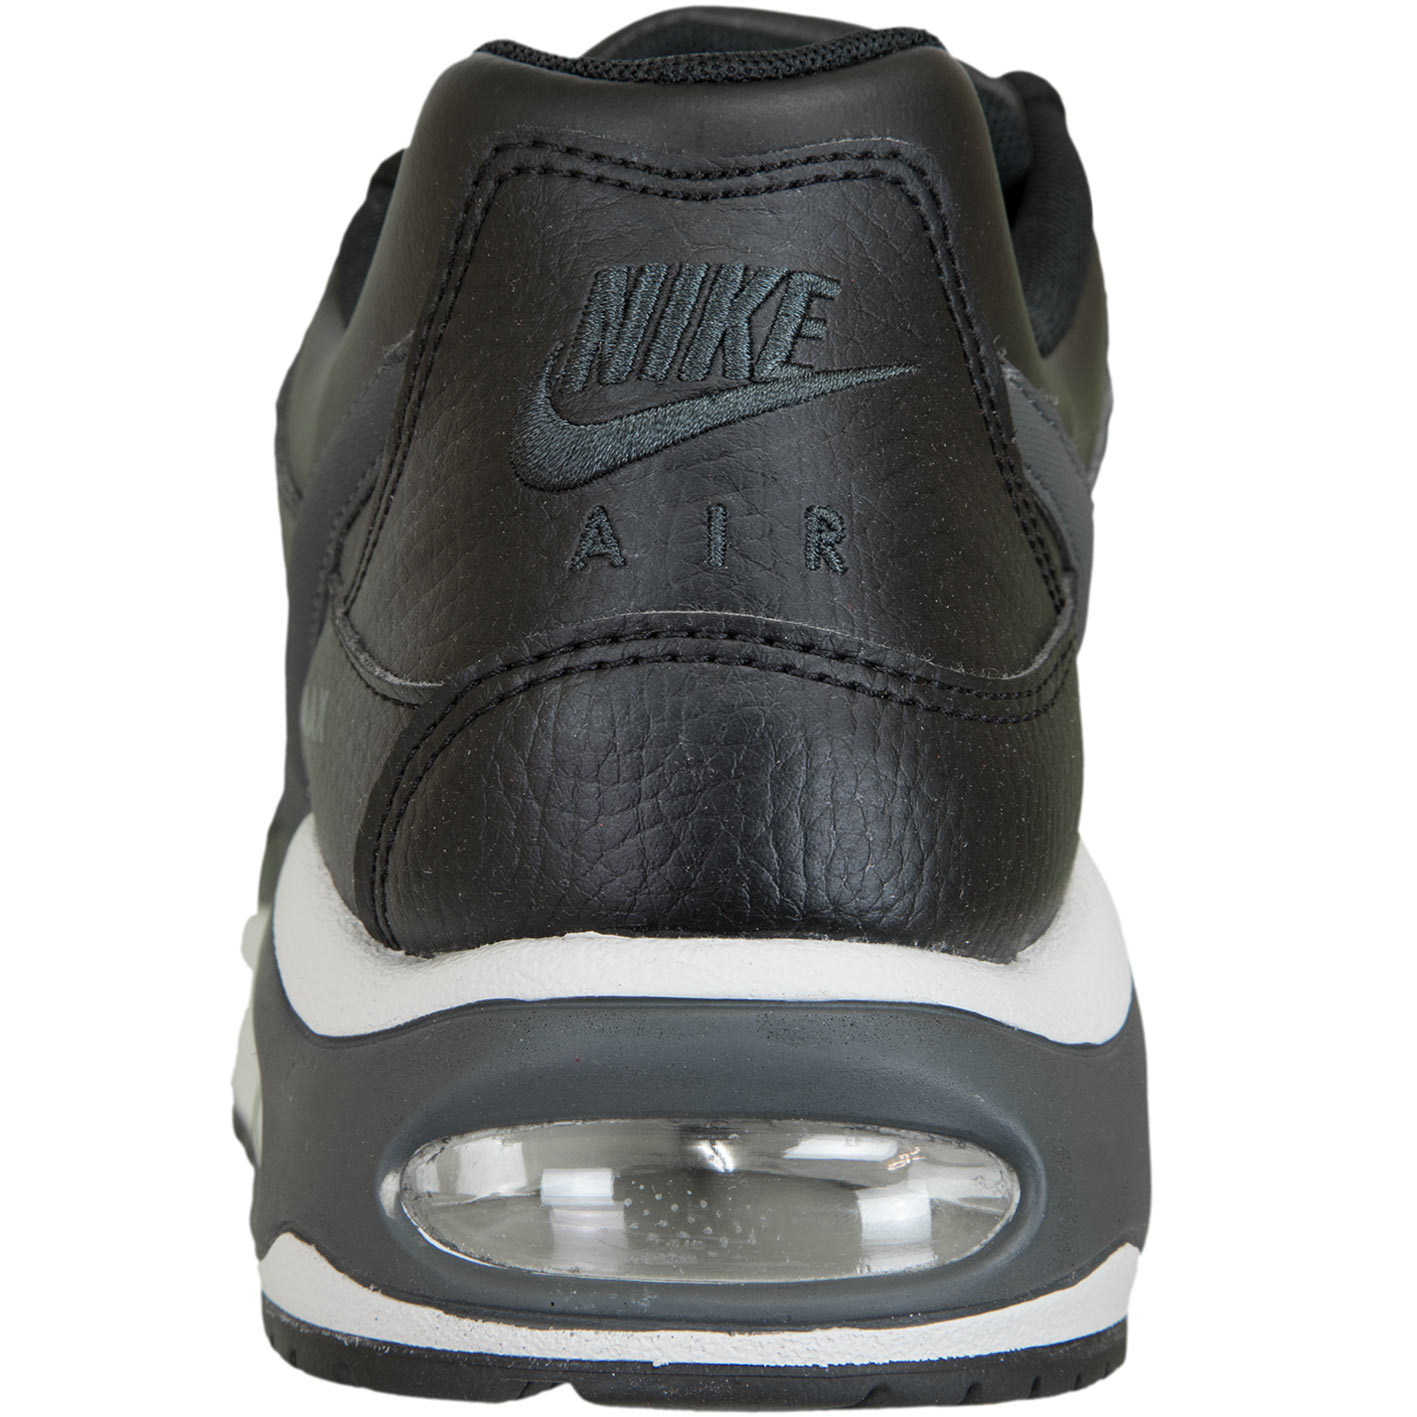 ☆ Nike Sneaker Air Max Command Leather schwarz/anthrazit - hier bestellen!